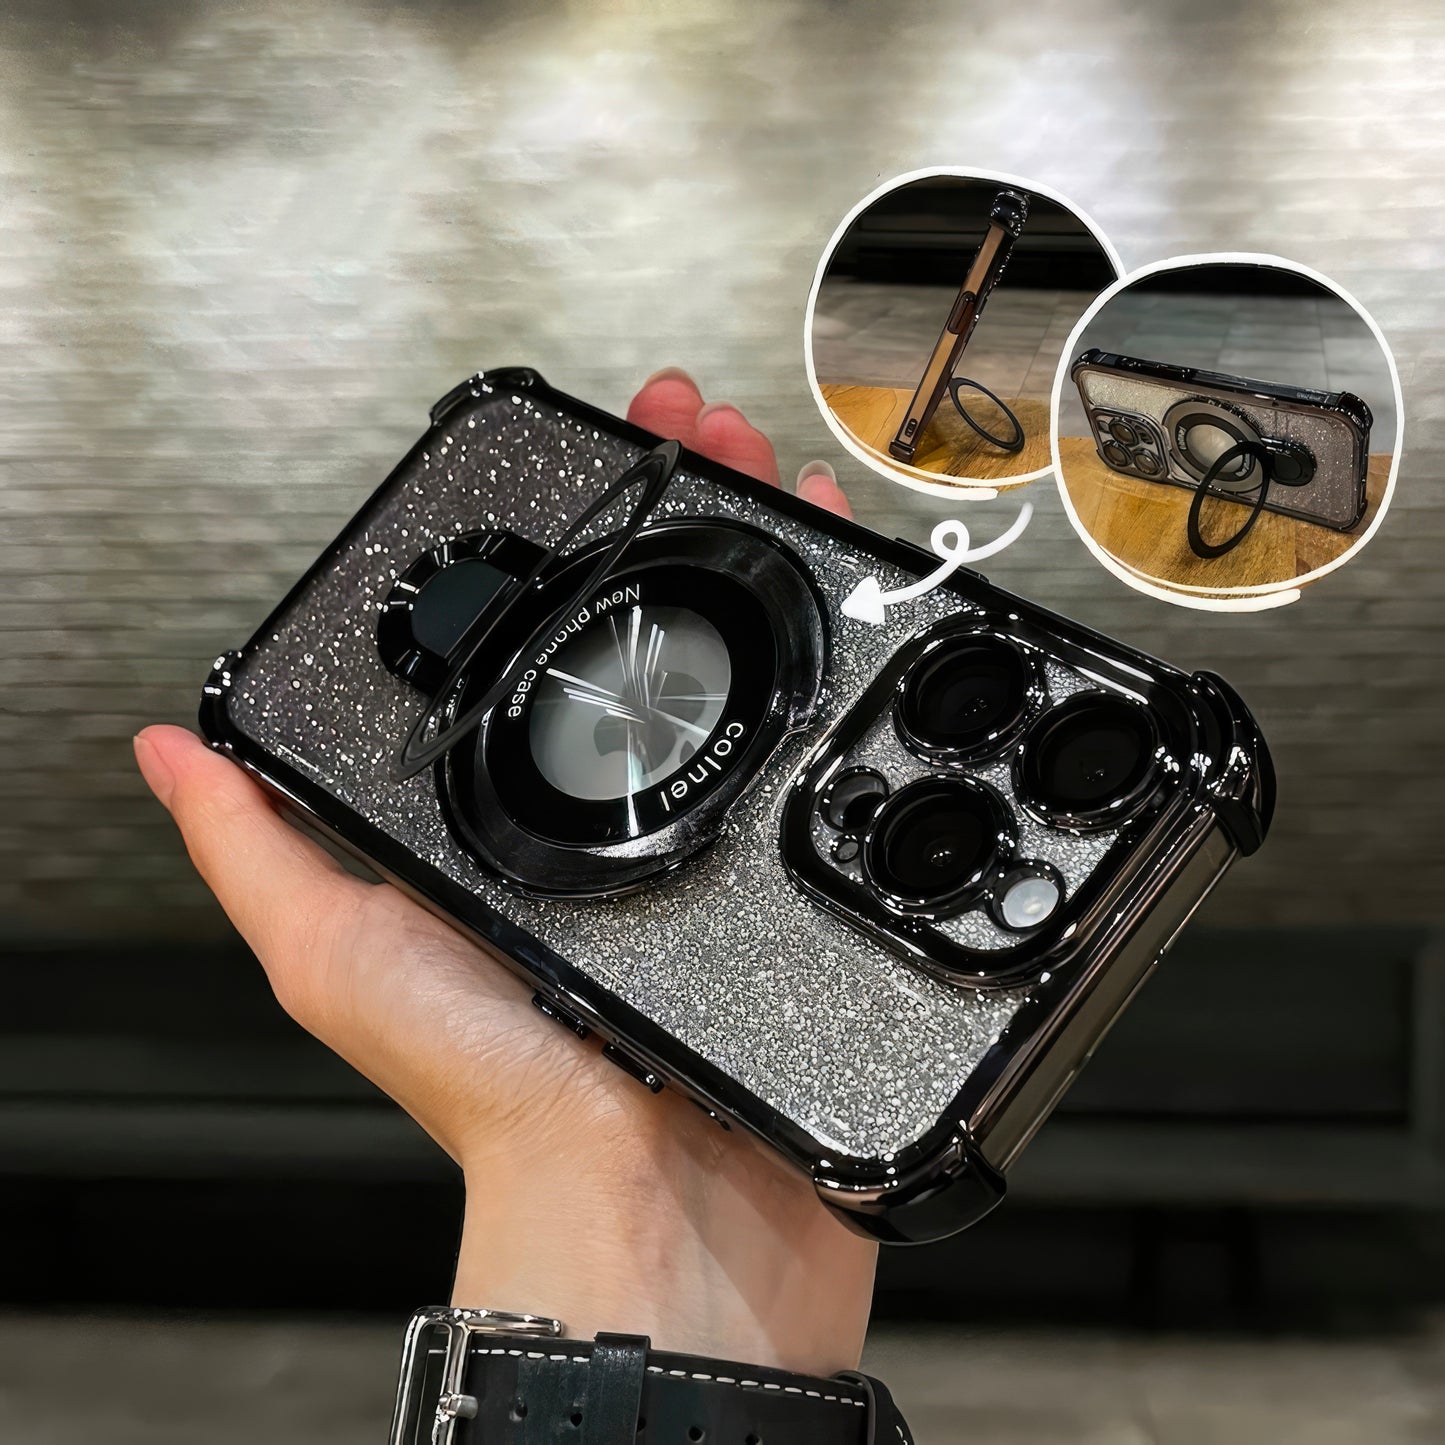 Coque Luxe 14 pro max brillante avec support et protection de caméra intégrée /  غطاء لامع لآيفون 14 برو ماكس مع حامل وحماية مدمجة للكاميرا